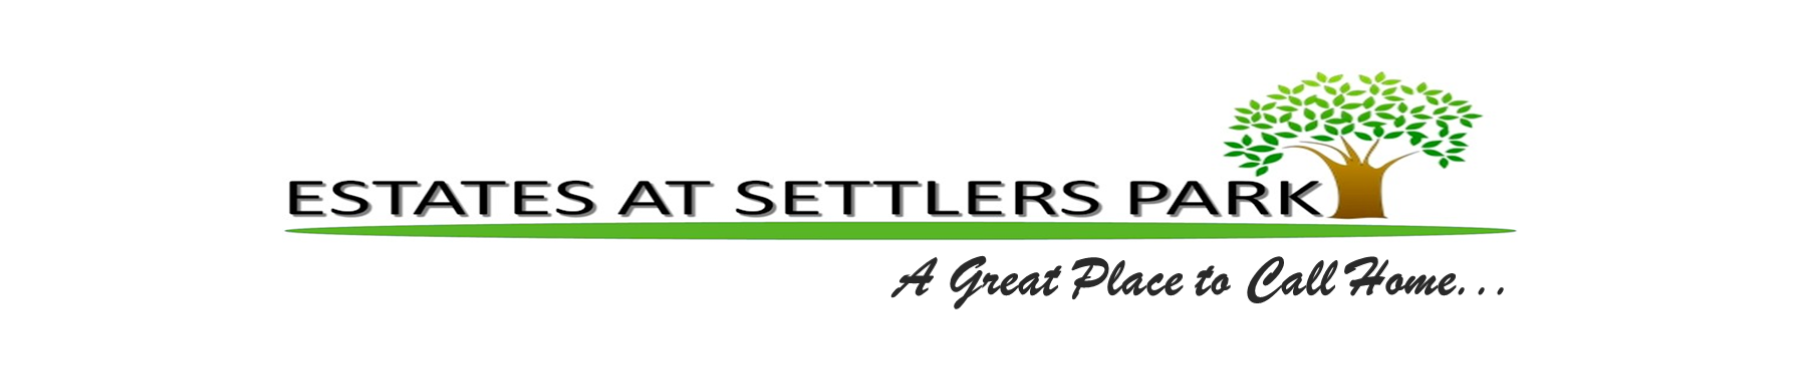 Estates at Settlers Park OA